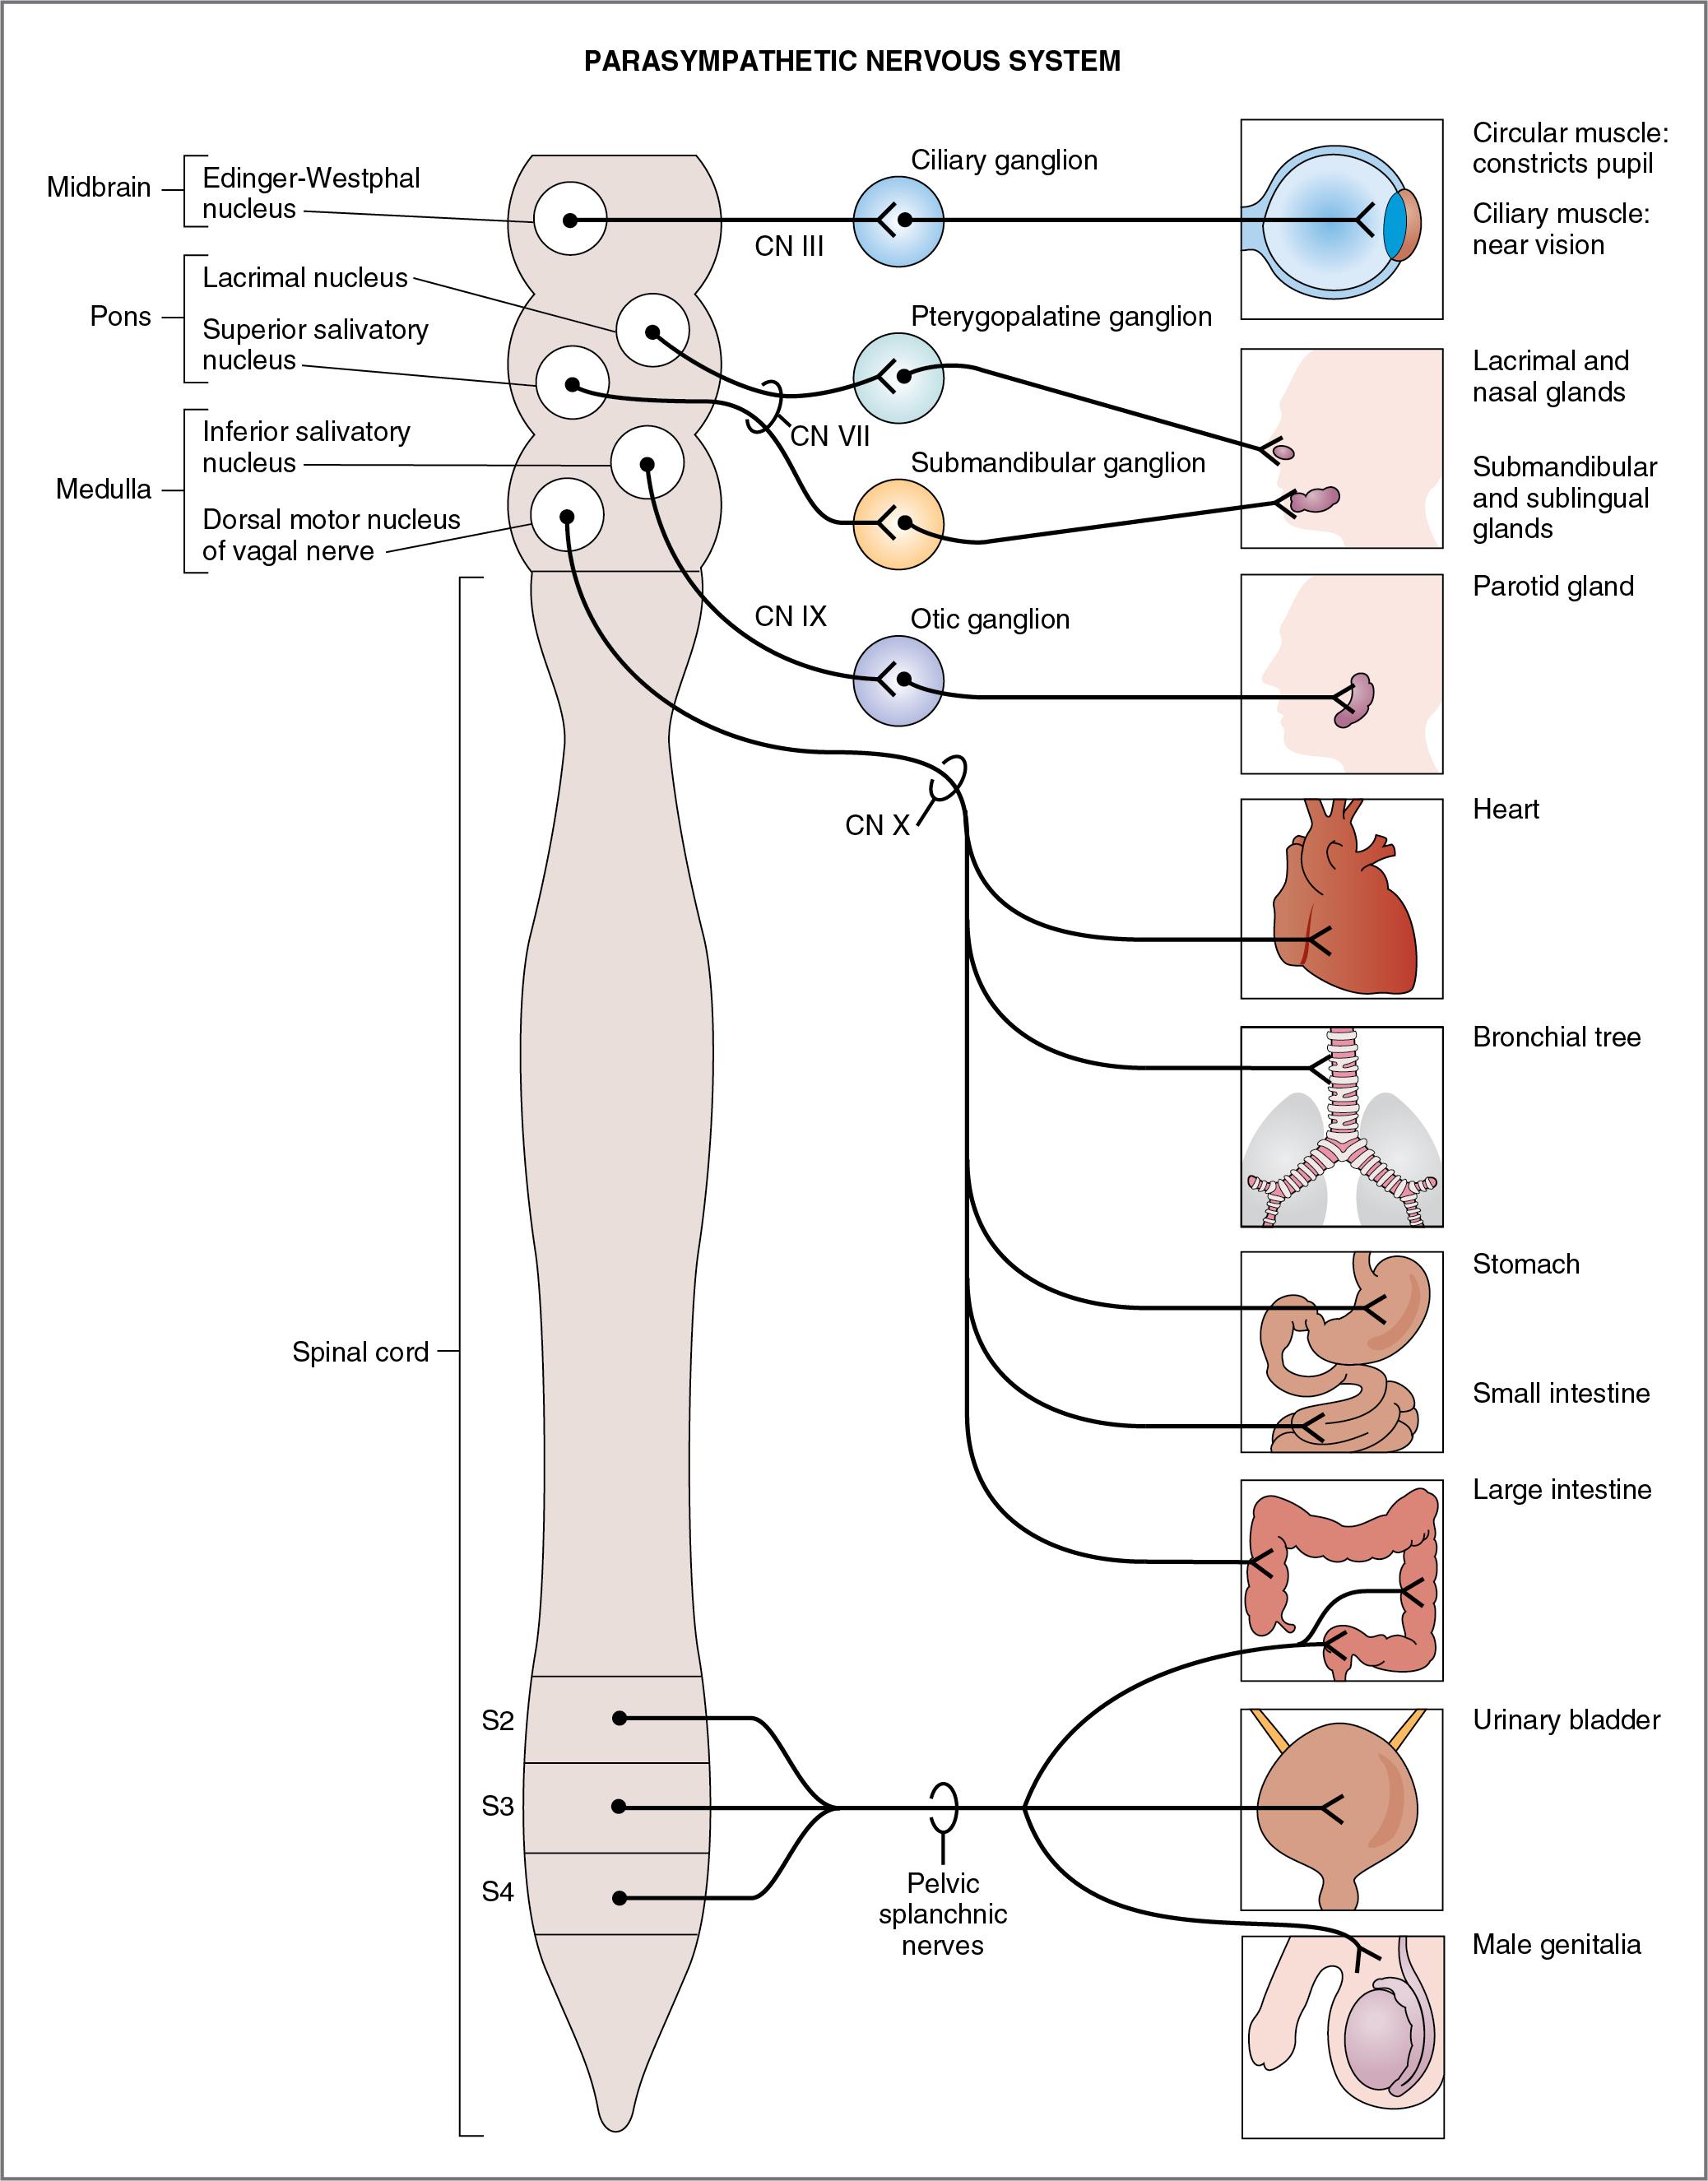 Fig. 2.3, Innervation of the parasympathetic nervous system.